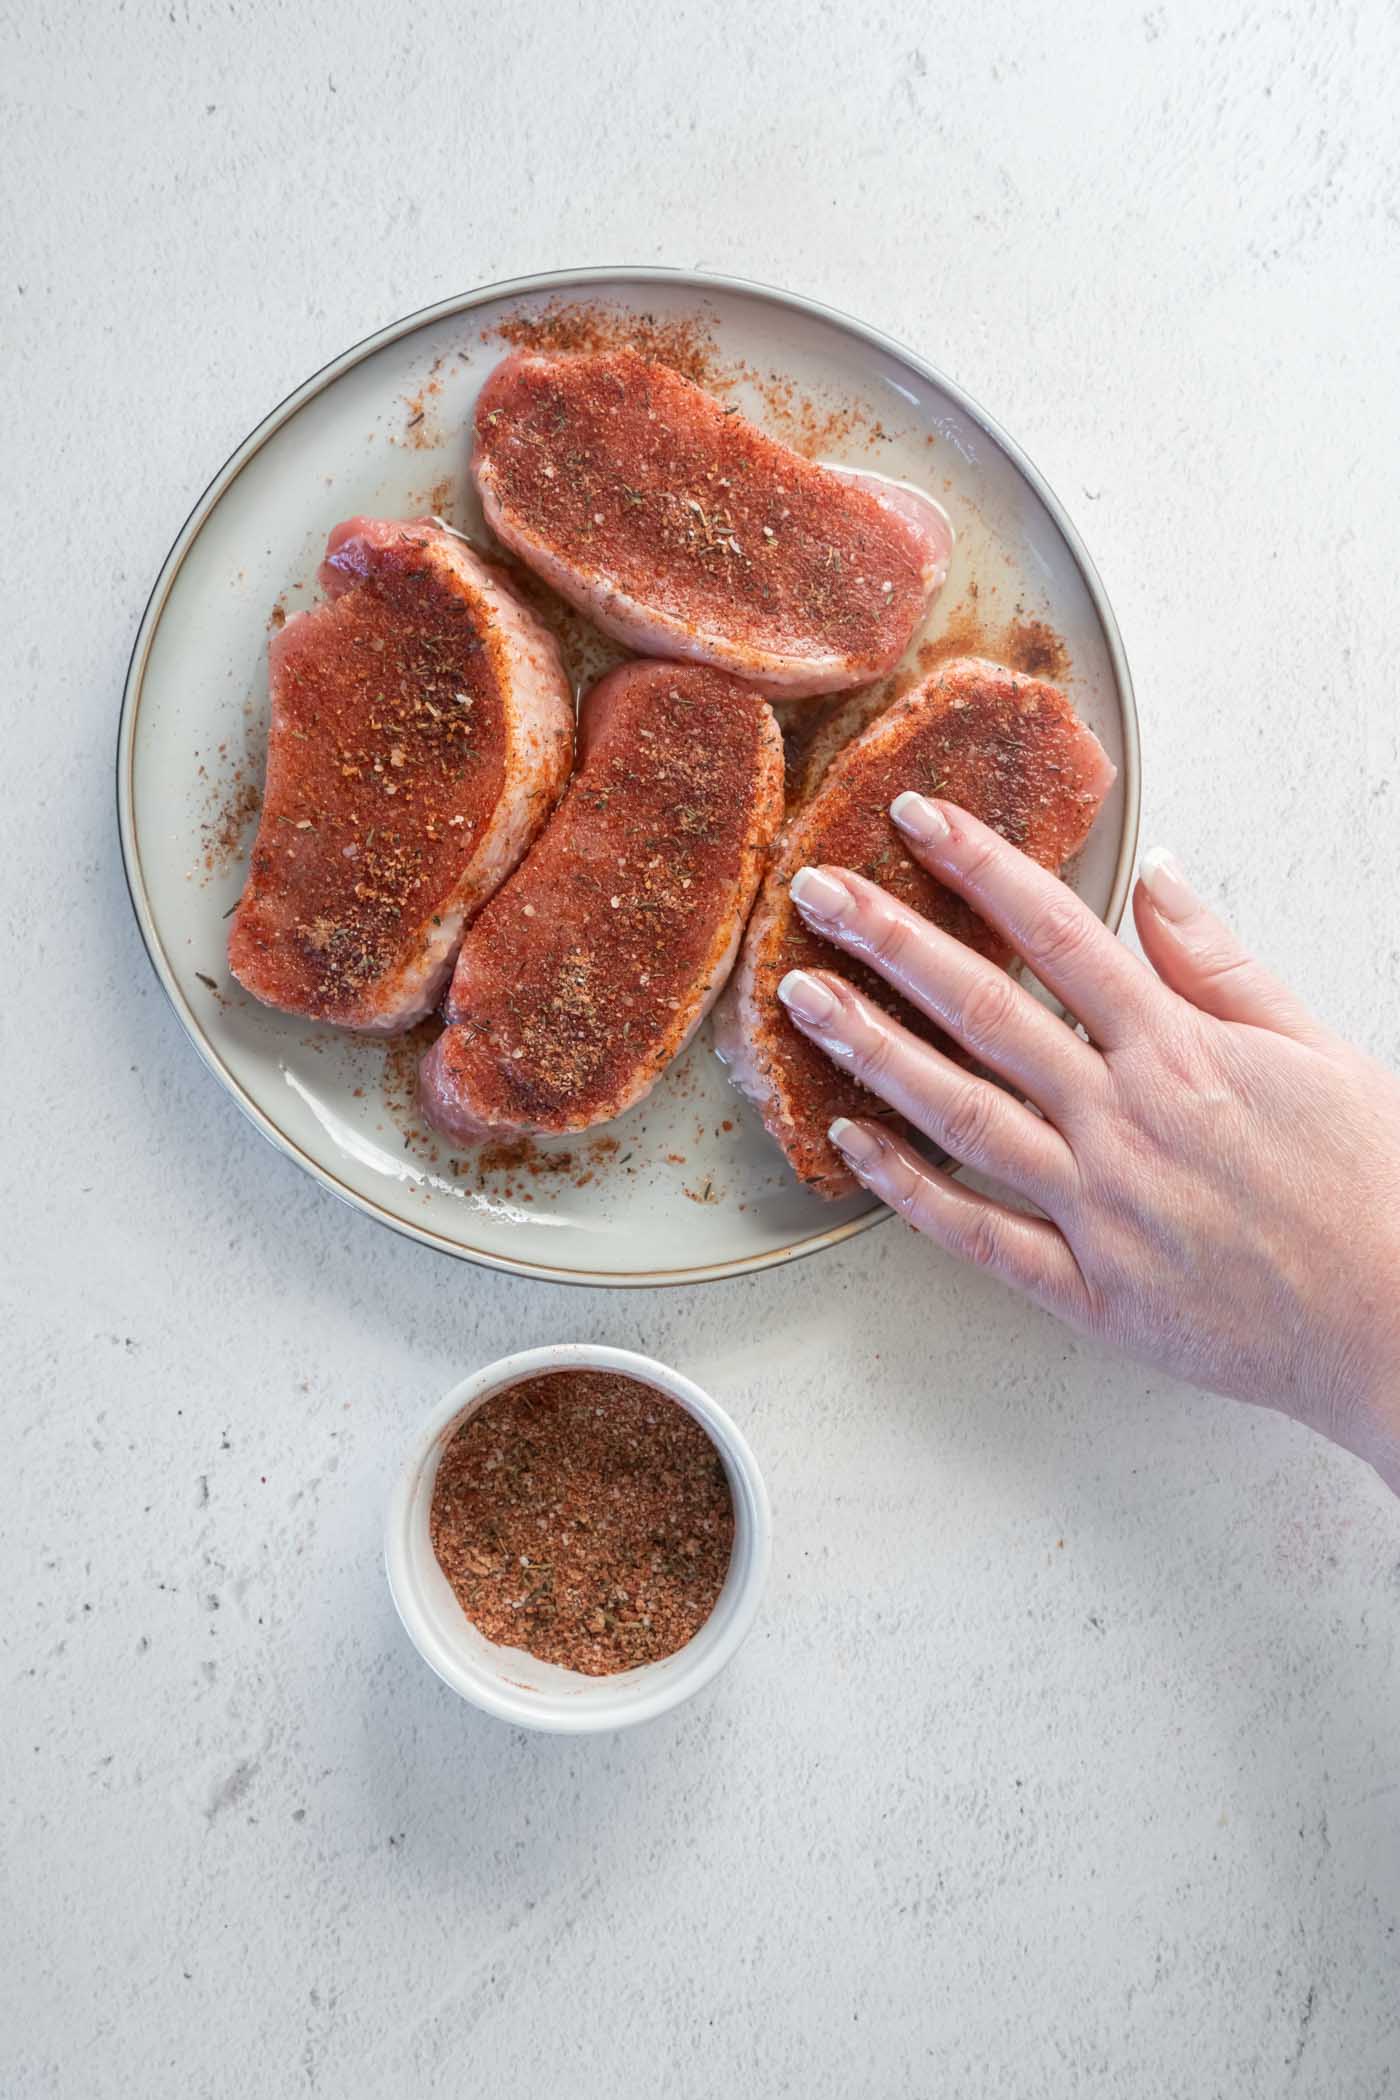 Rubbing seasonings onto four boneless pork chops.